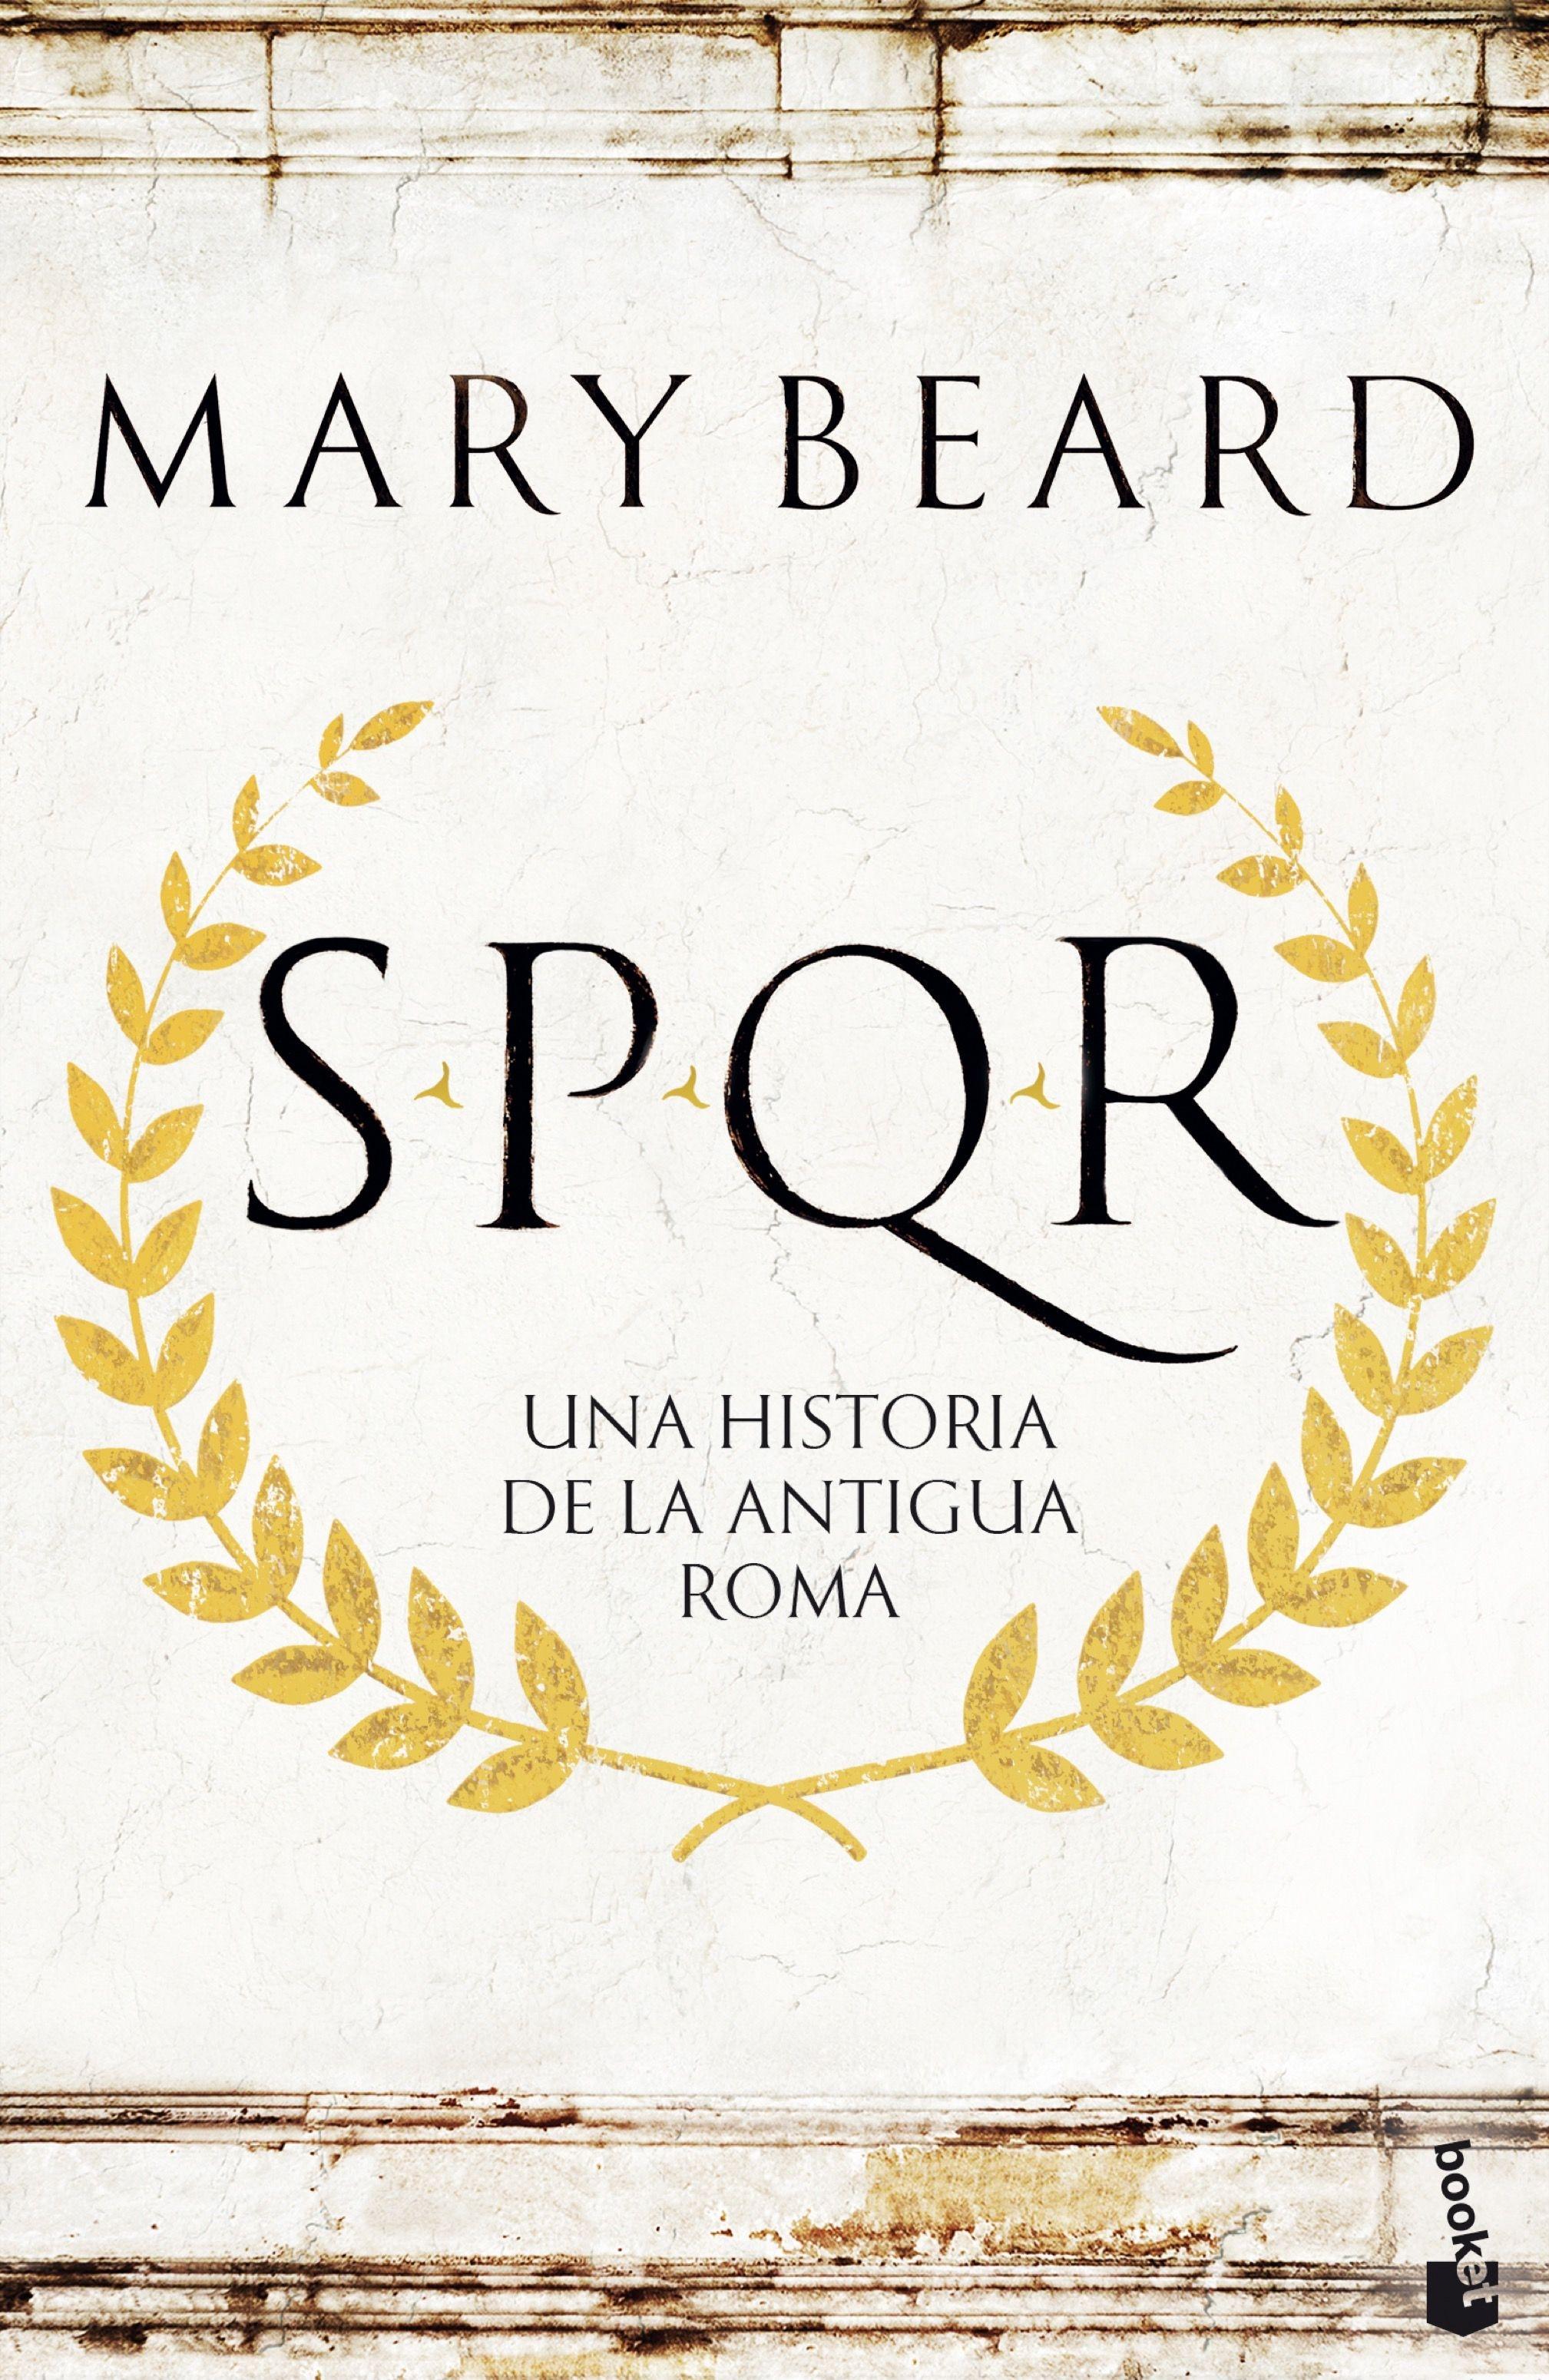 SPQR "Una historia de la antigua Roma". 